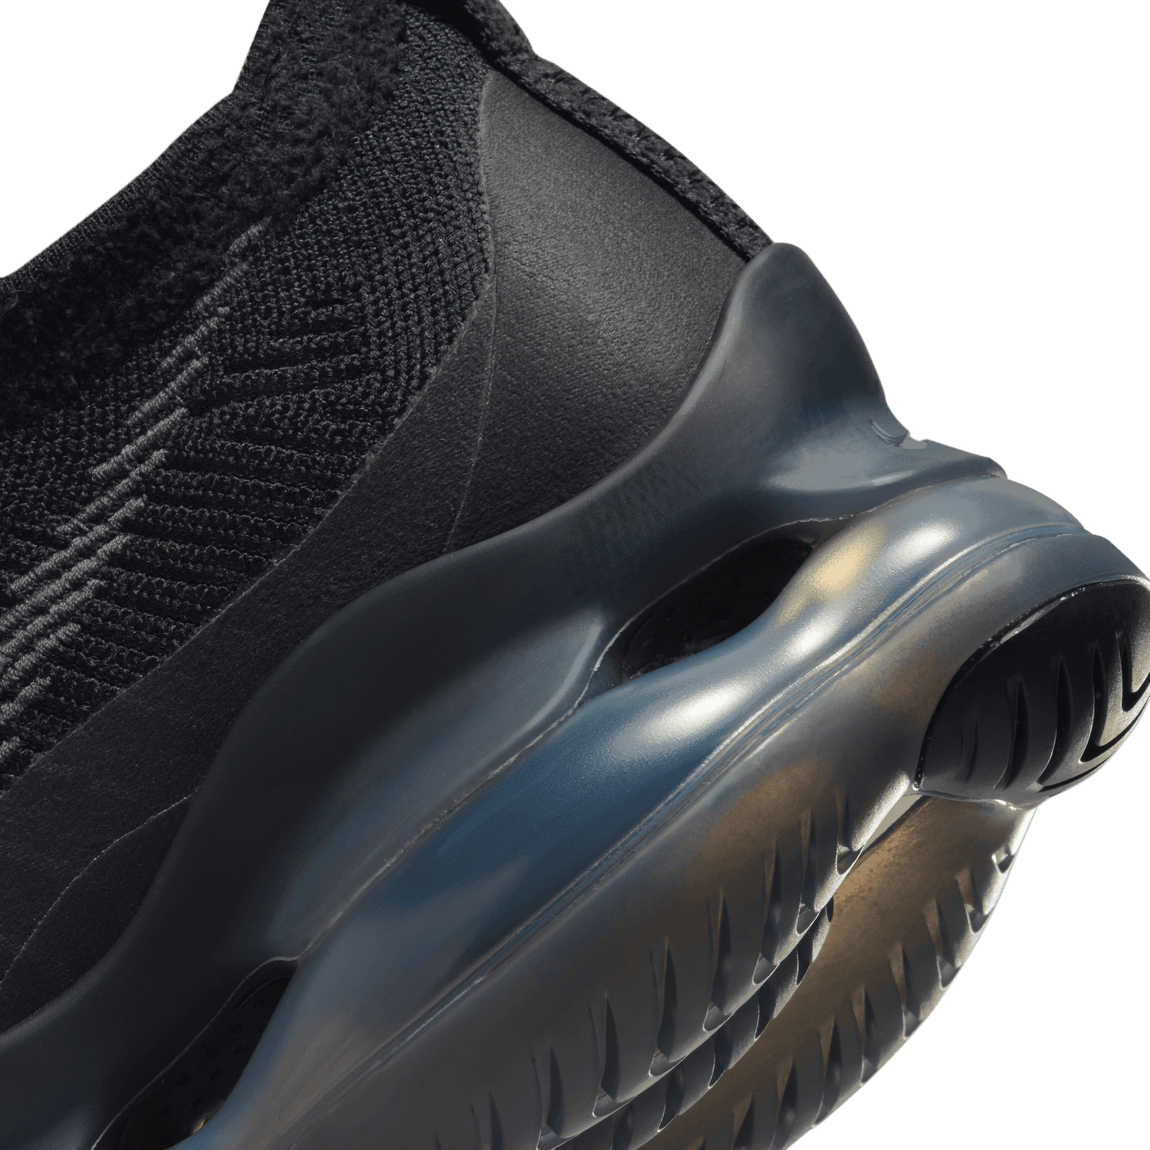 Nike Air Max Scorpion Flyknit (Black/Anthracite-Black) - Nike Air Max Scorpion Flyknit (Black/Anthracite-Black) - 